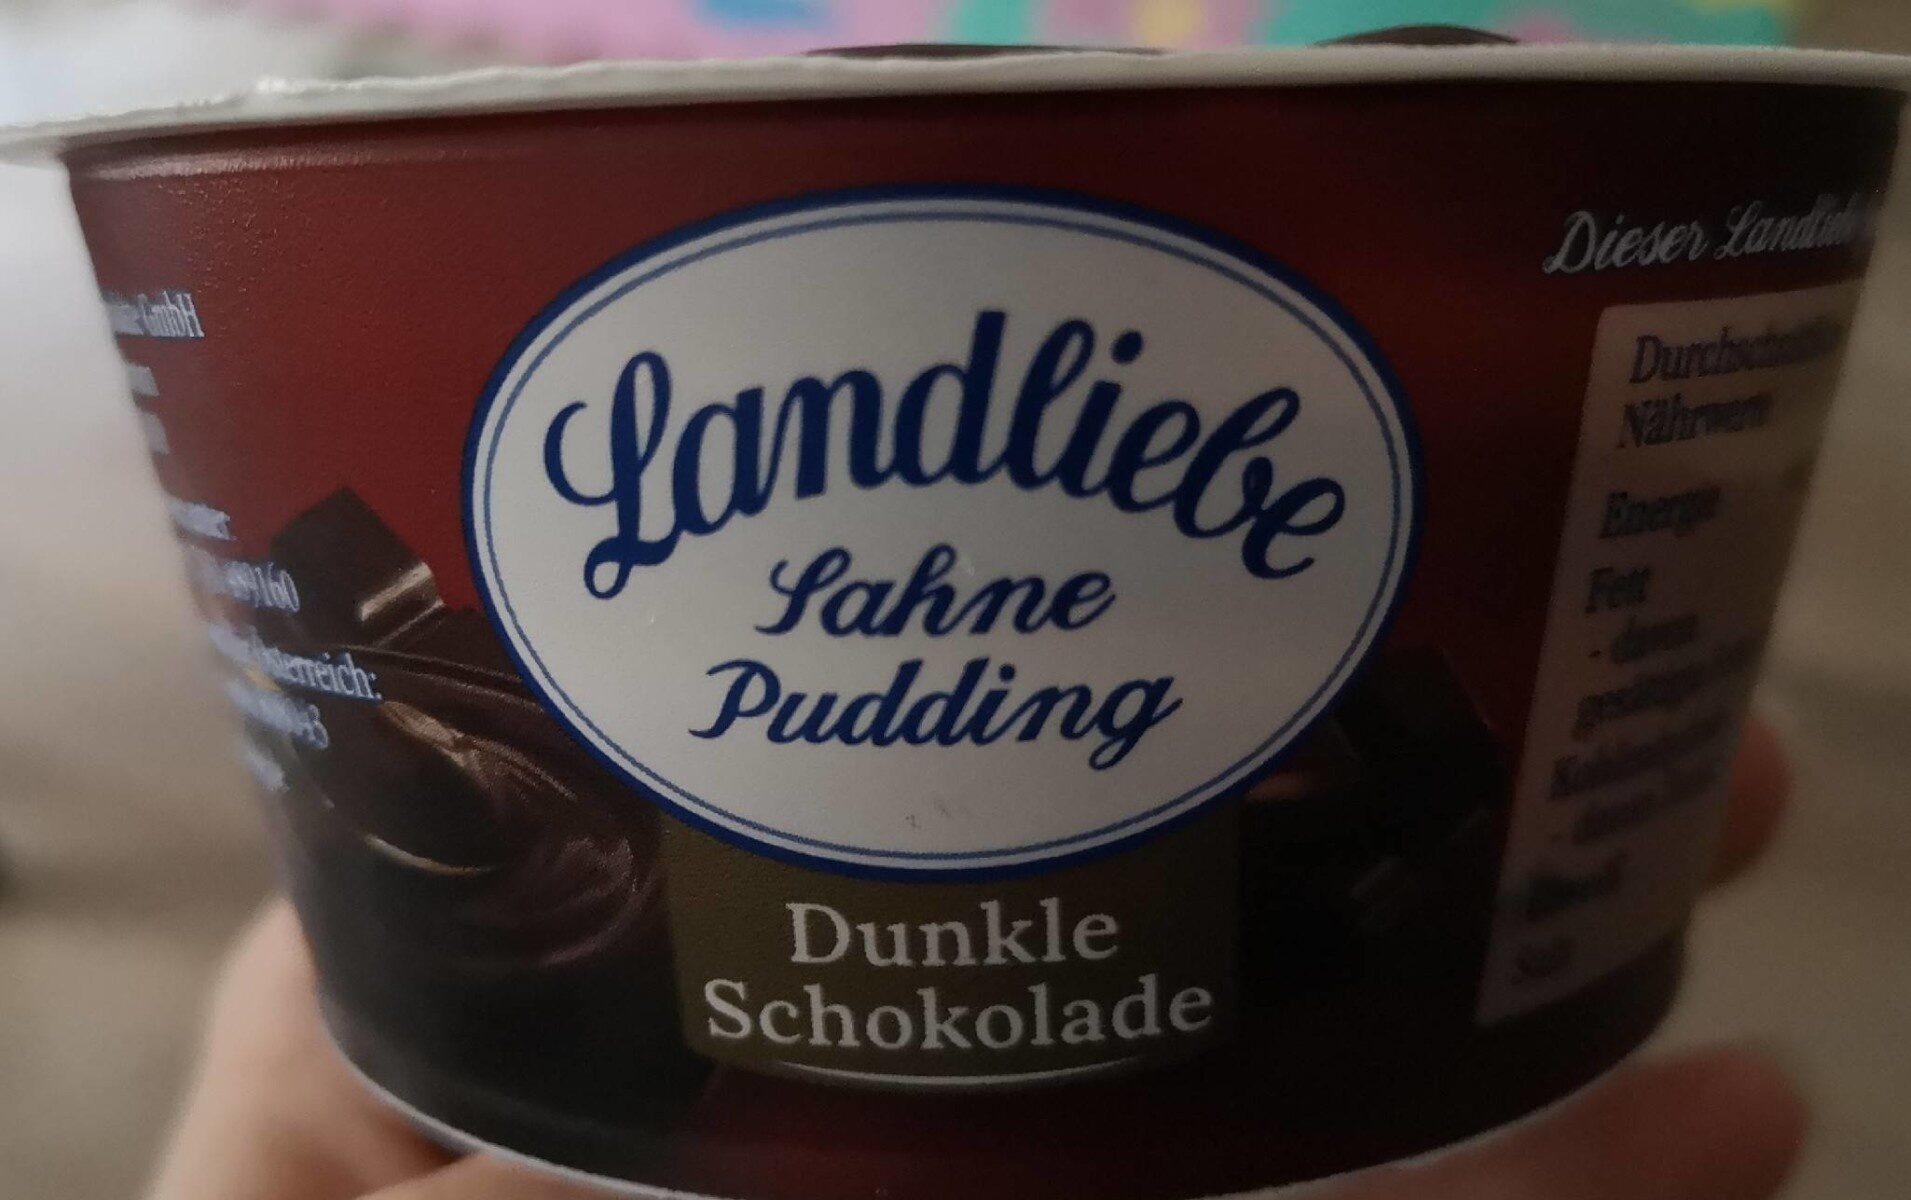 Landliebe Sahne Pudding Dunkle Schokolade - Produkt